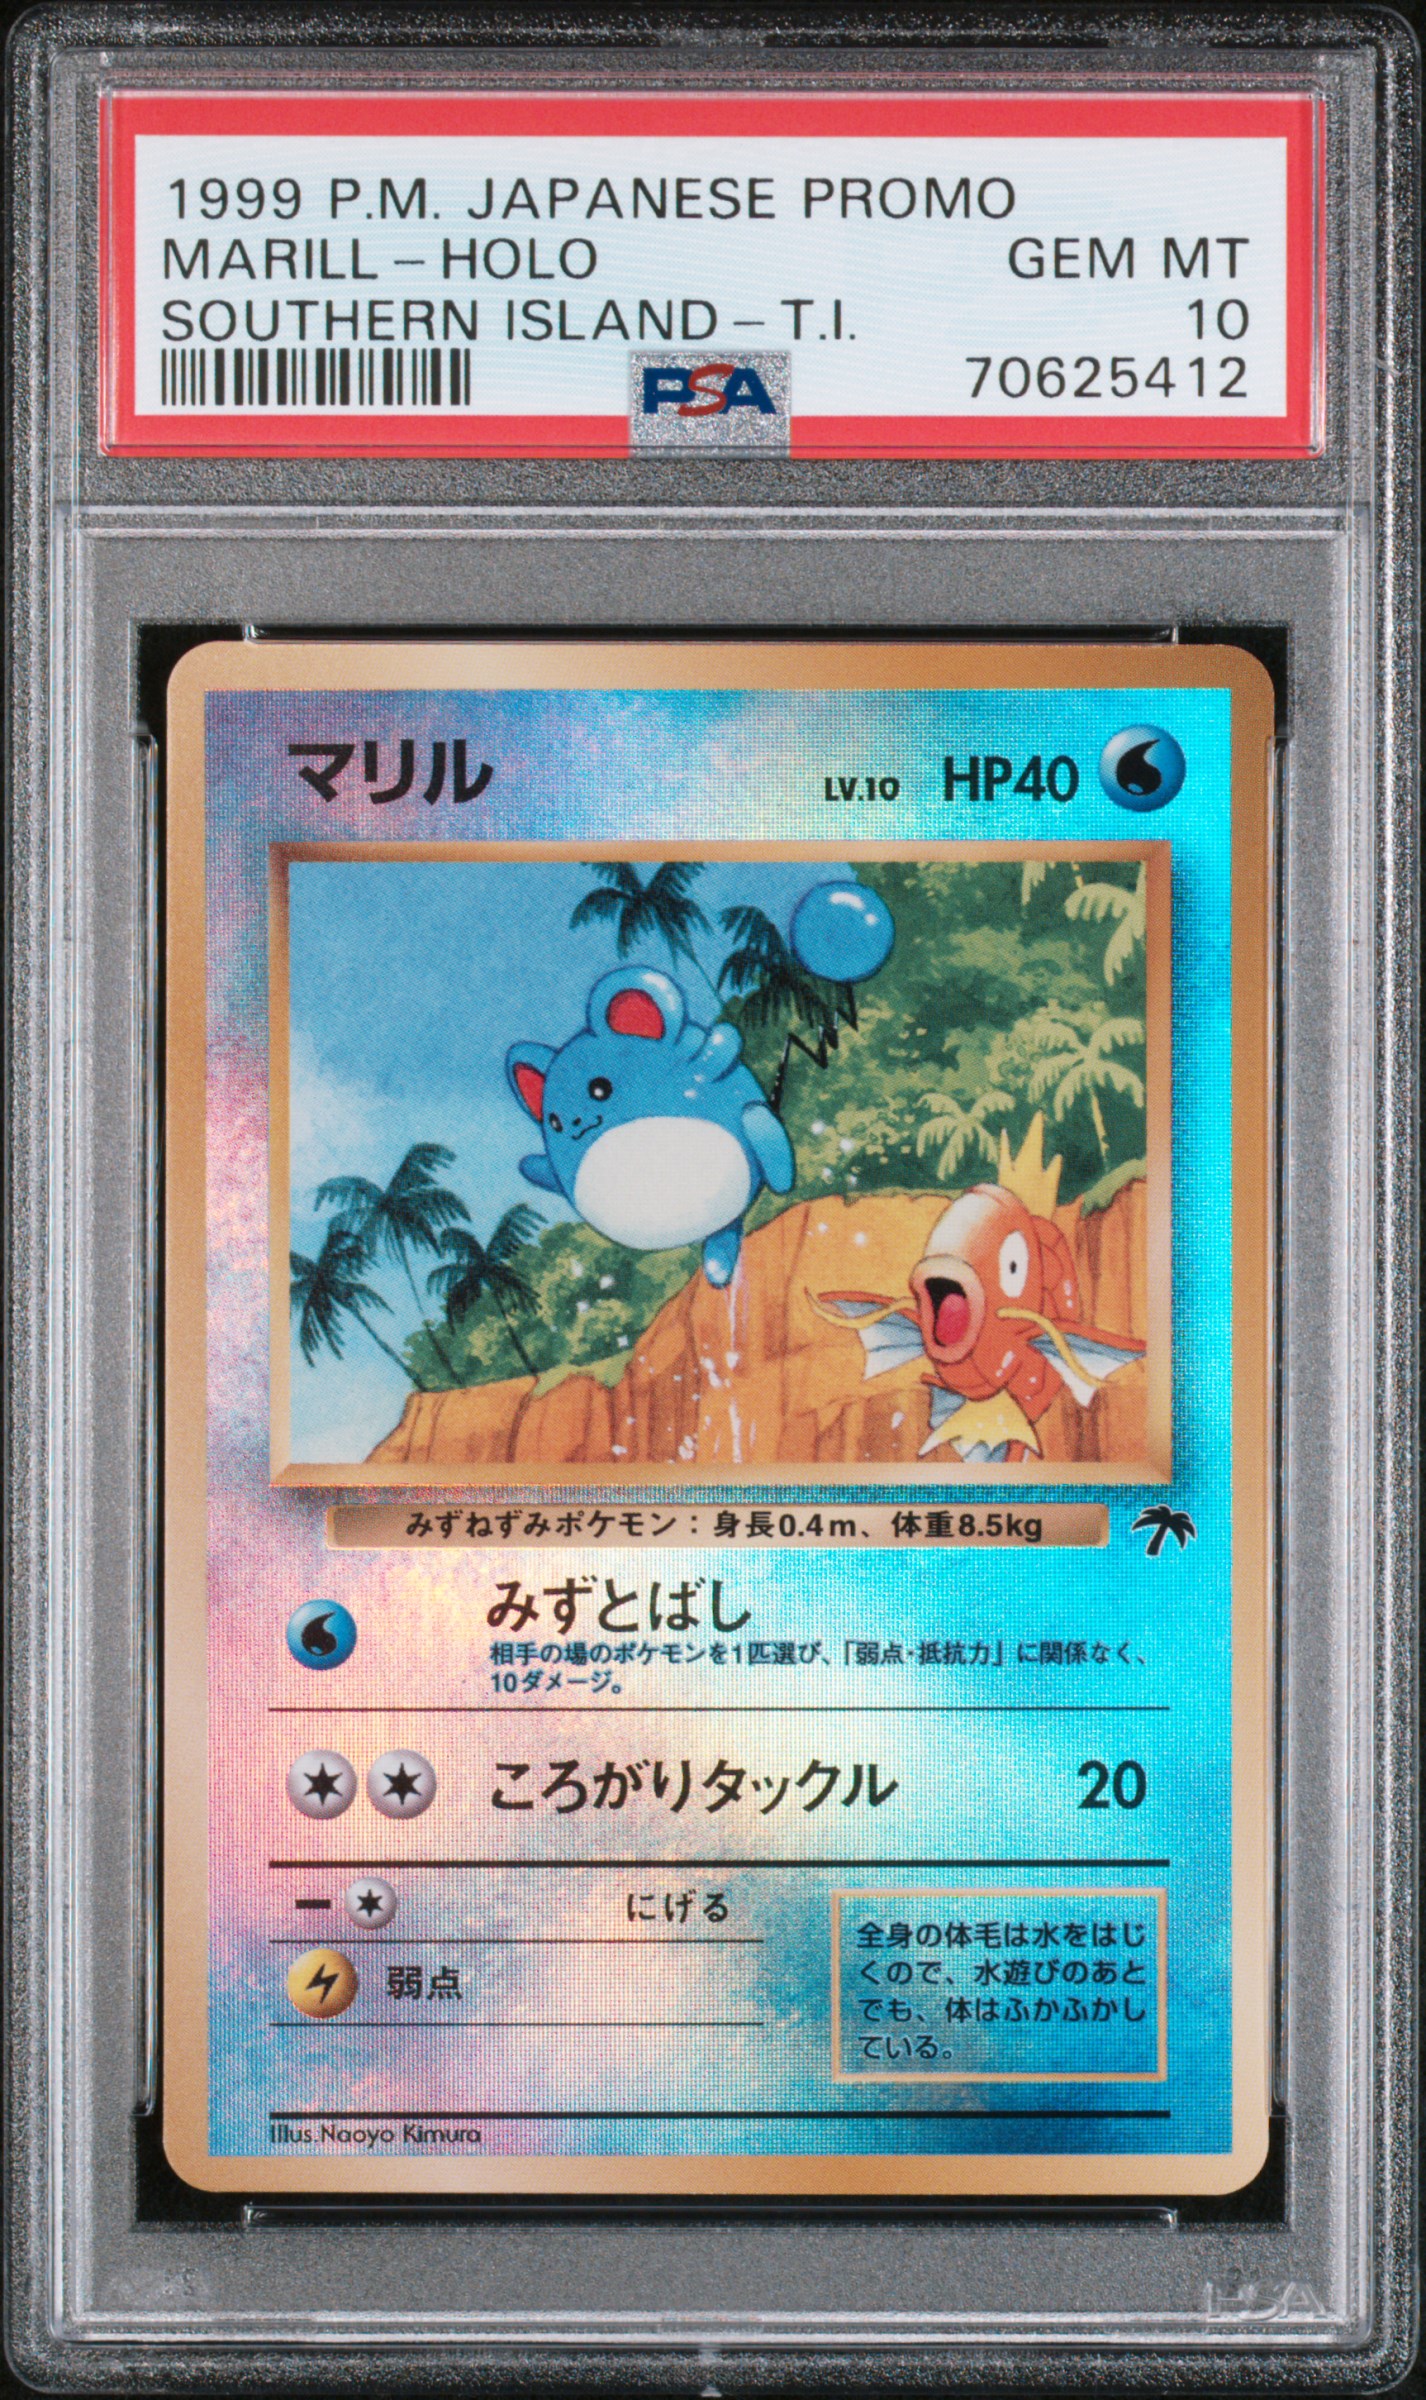 1999 Pokemon Japanese Promo Southern Islands Southern Island T.I. Holofoil Marill – PSA GEM MT 10